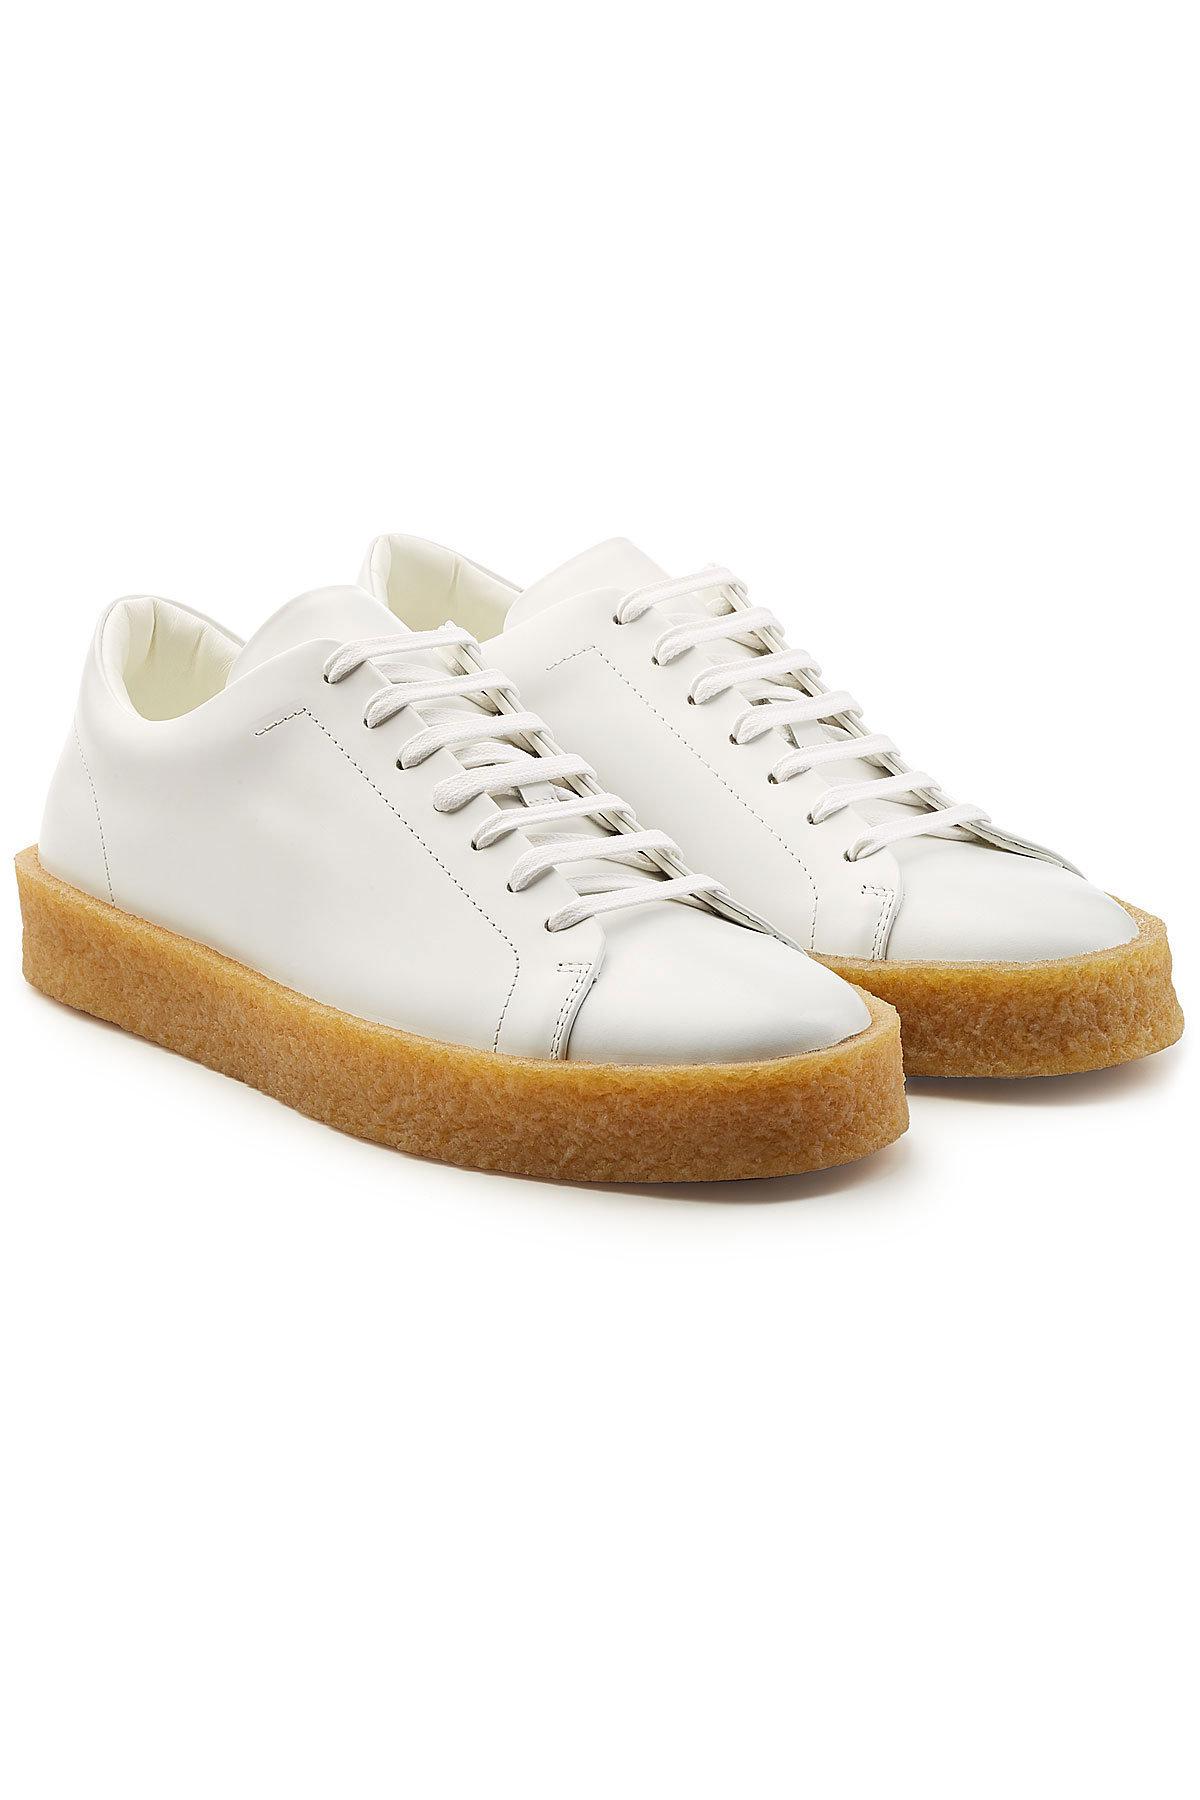 Lyst - Jil Sander Leather Sneakers in White for Men